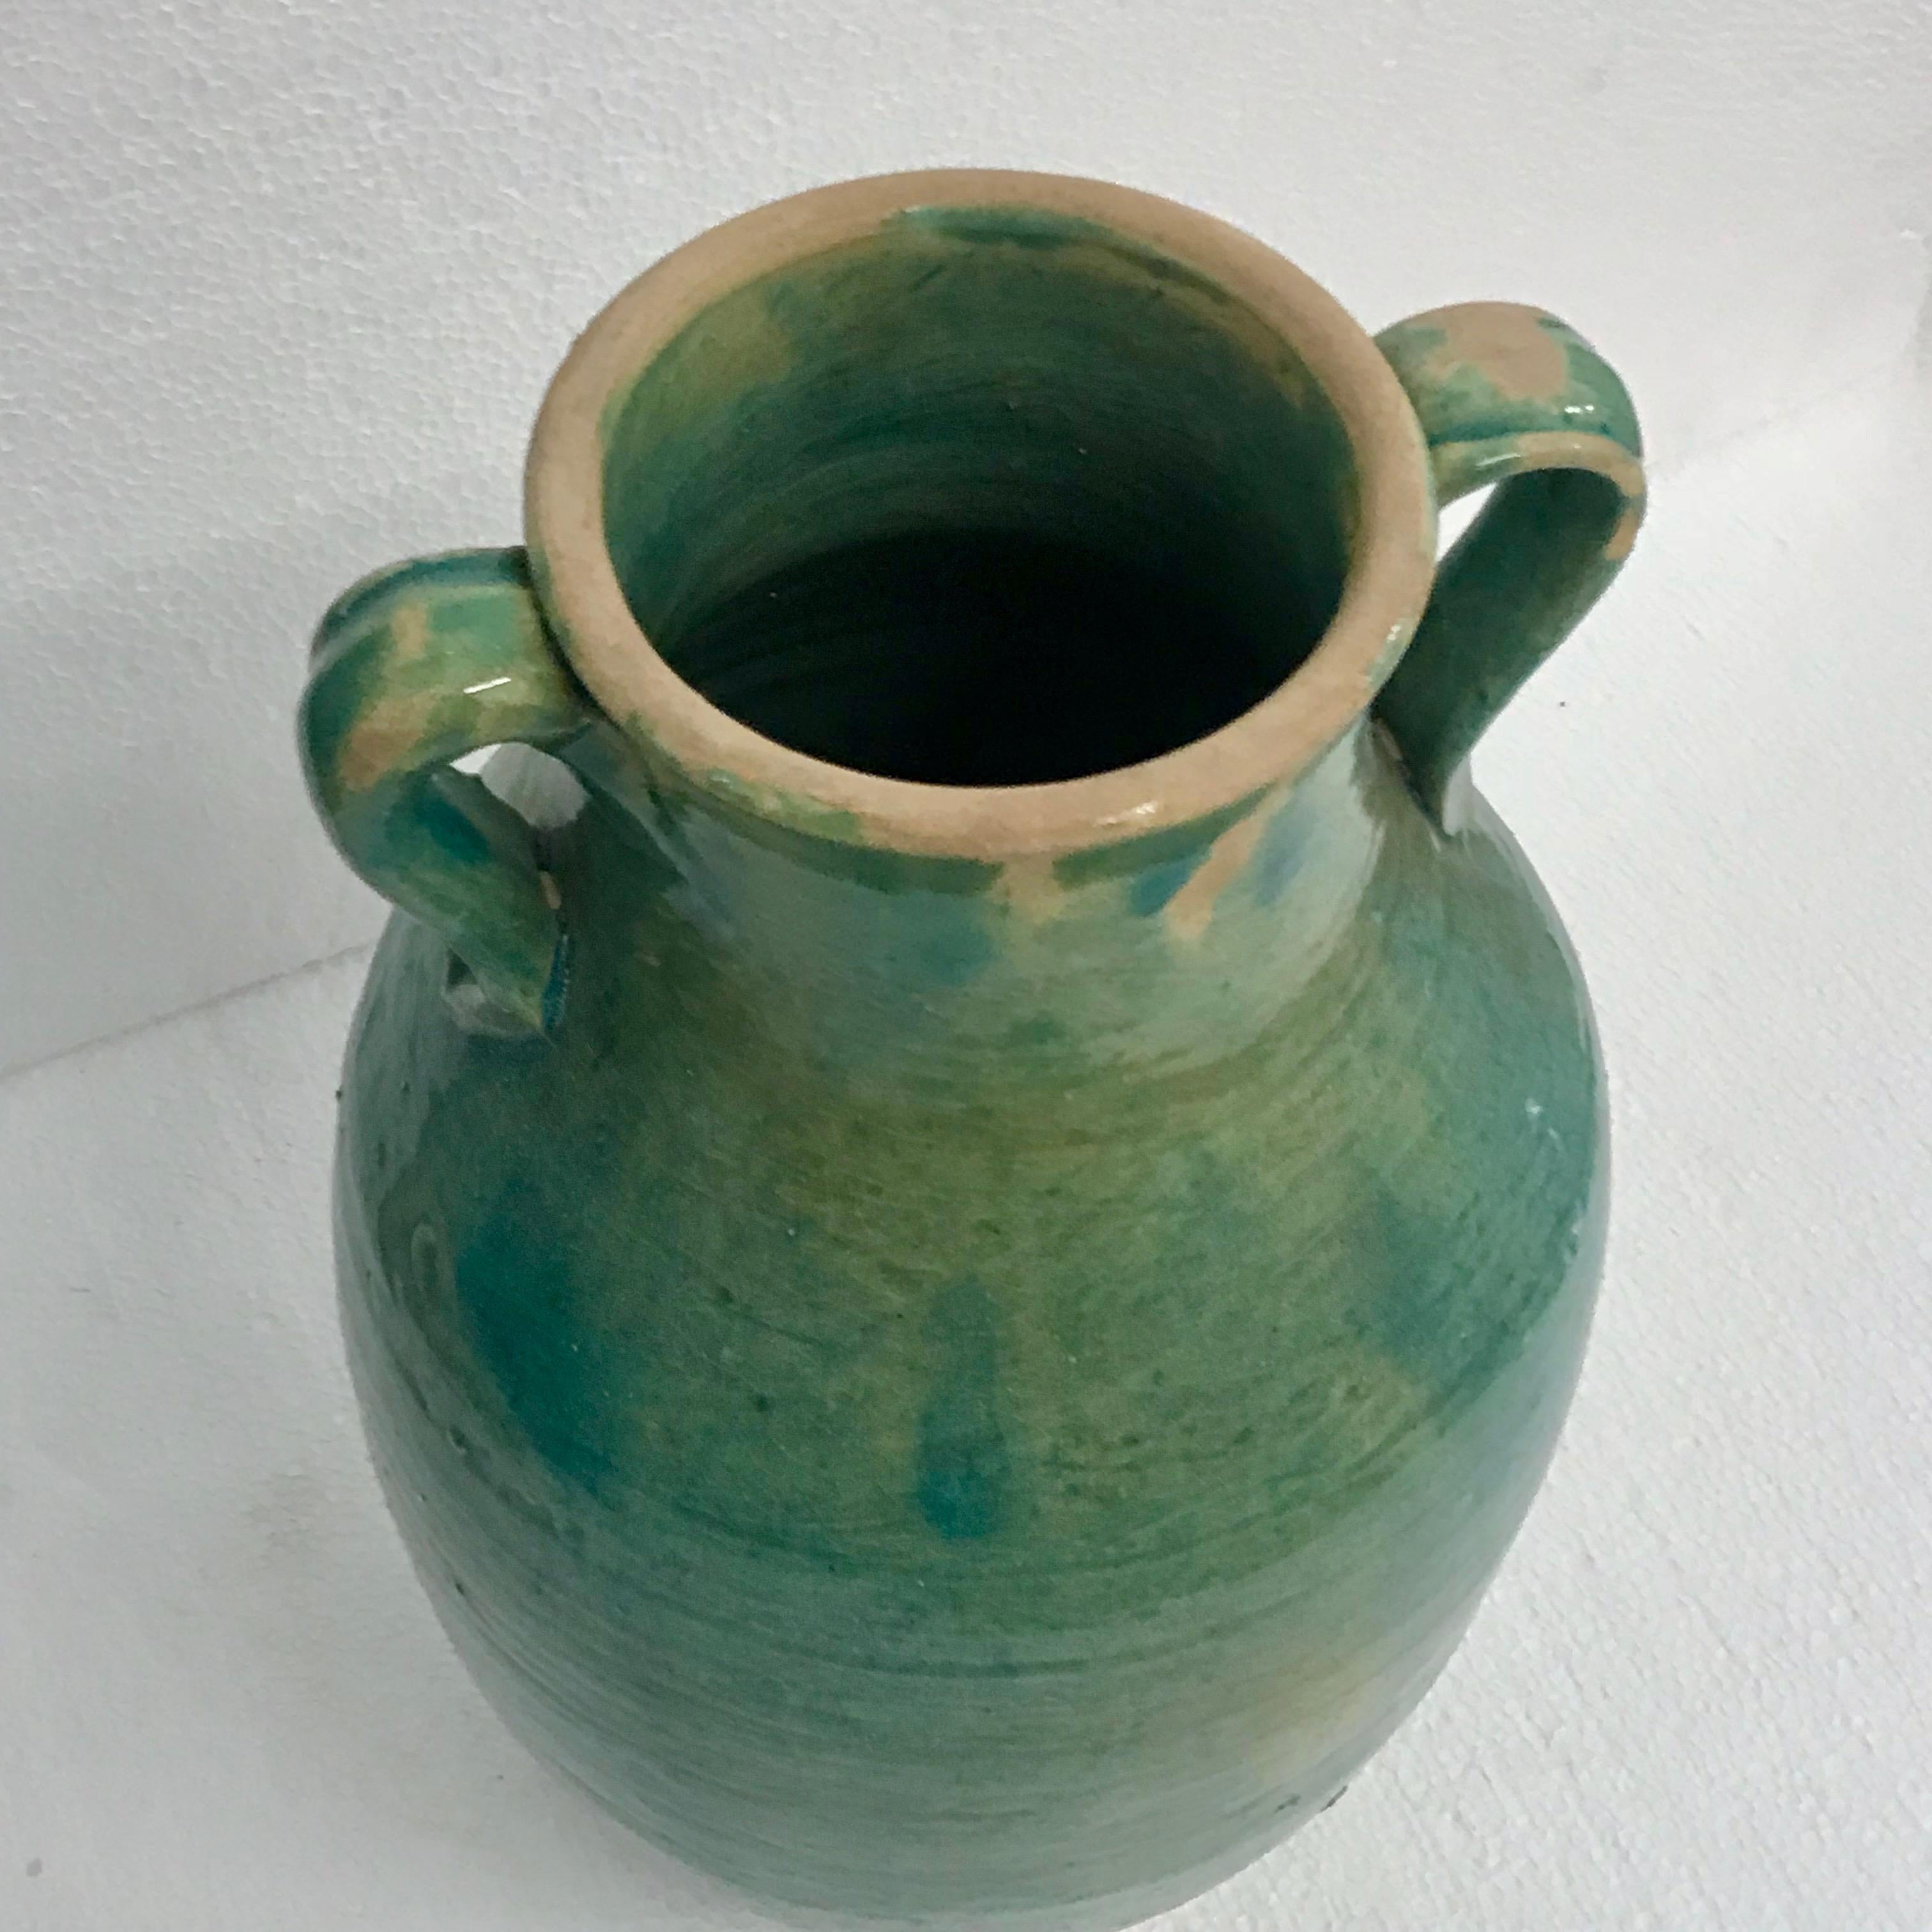 Contemporary Handmade Rustic Farmhouse Blue-Green Glazed Terracotta Clay Pot Jar with Handles